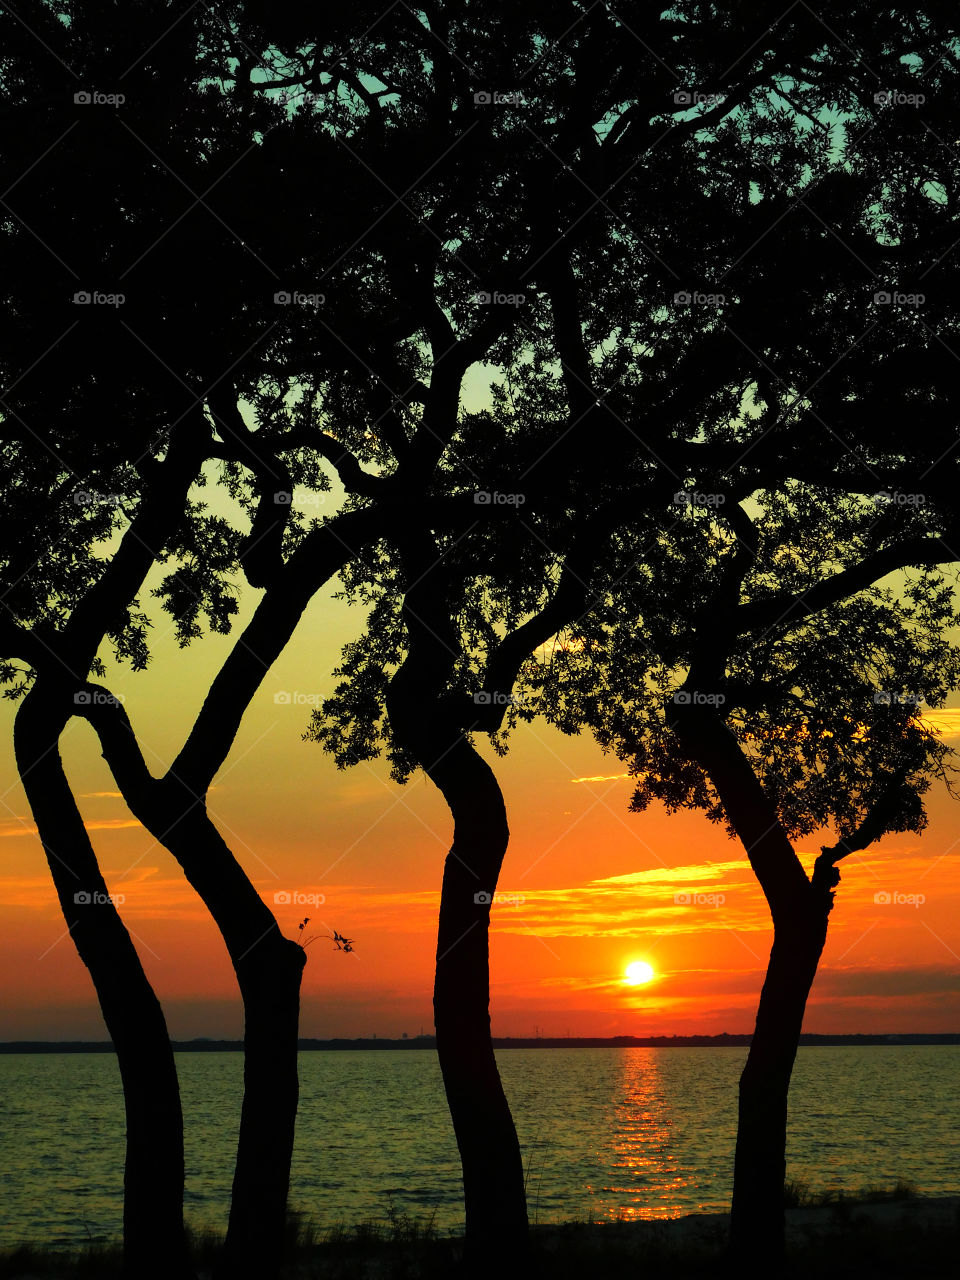 Silhouette of tree near lake at sunset